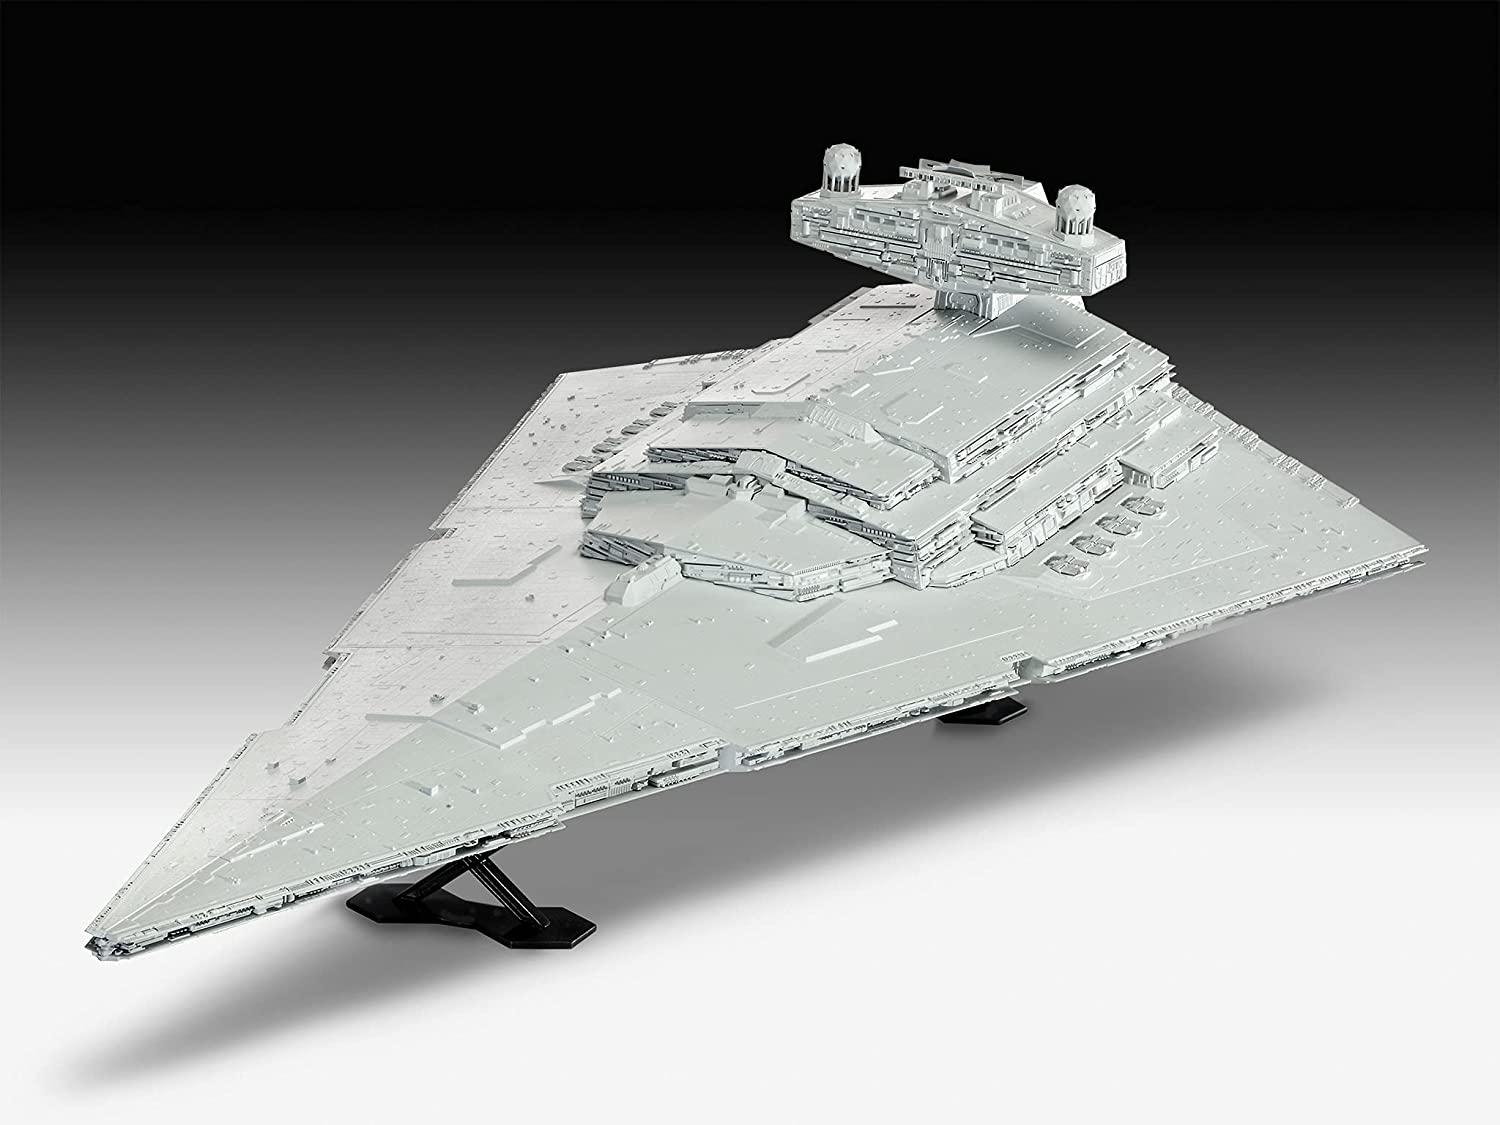 Revell 6719 - Star Wars Imperial Star Destroyer - Escala 1:2700